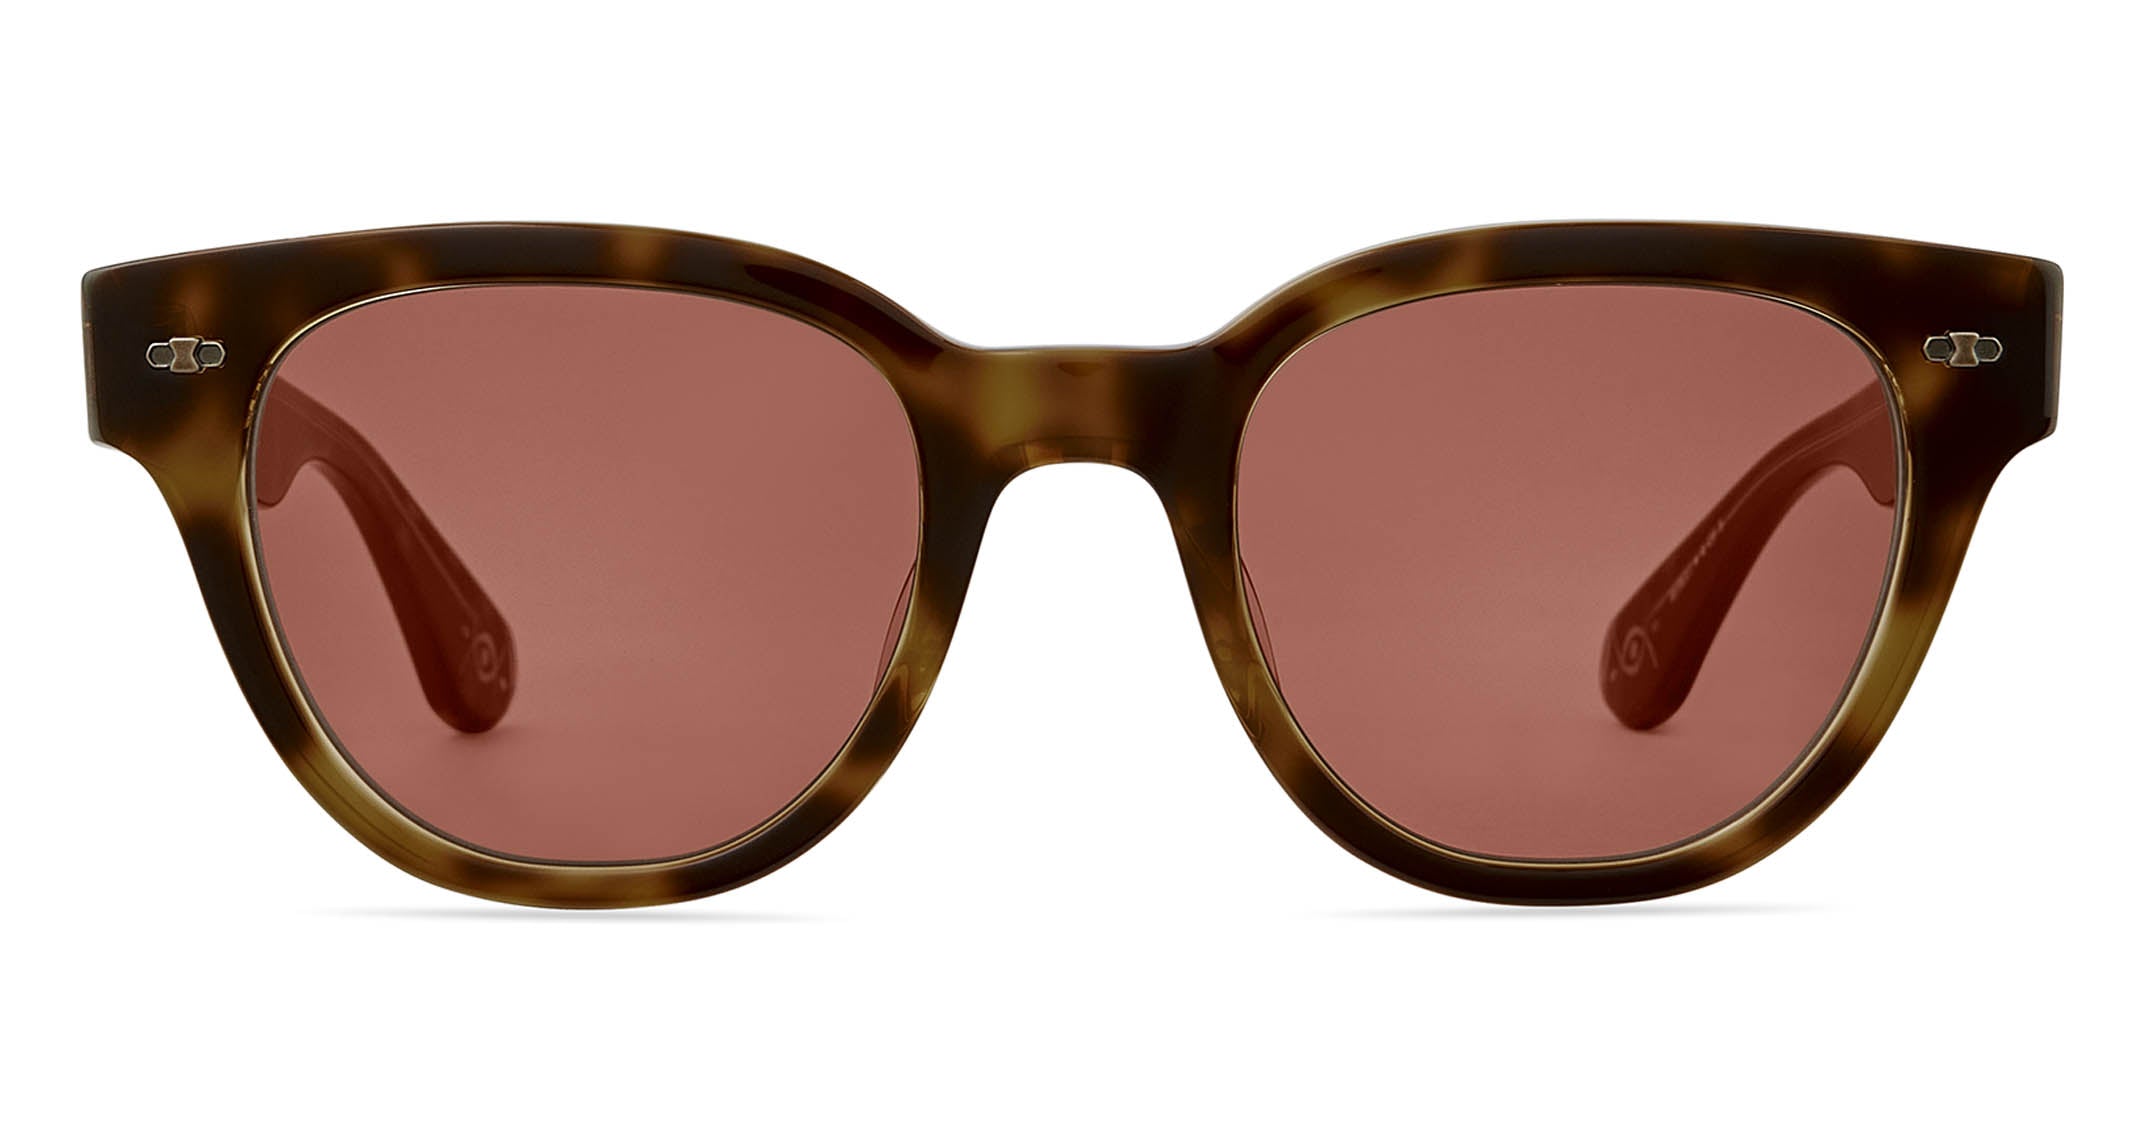 Mr. Leight Sunglasses Collection - Garrett Leight California Optical